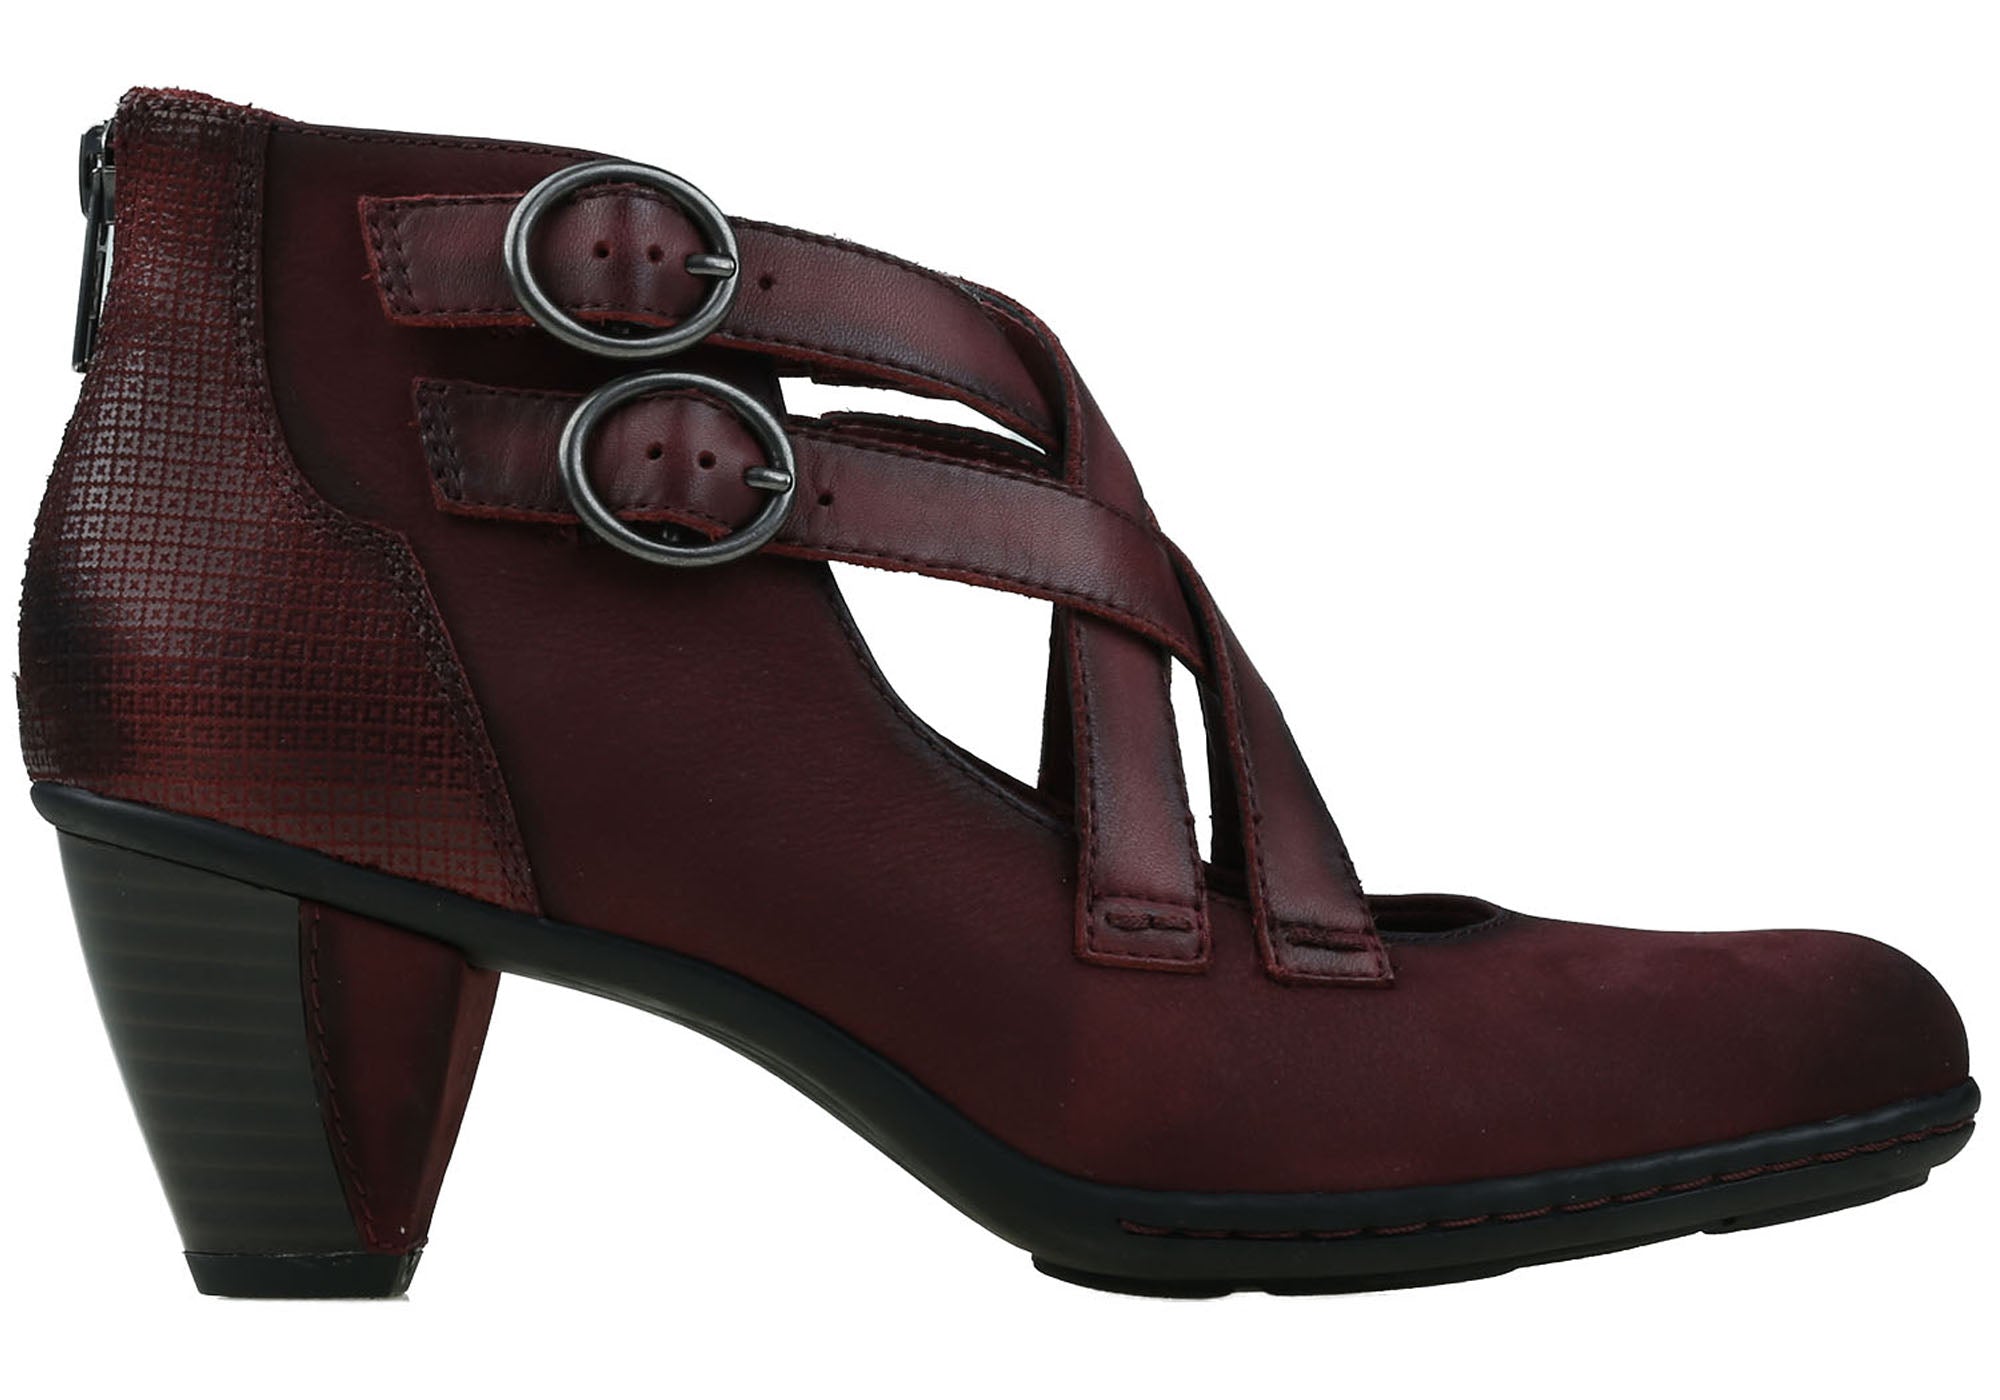 burgundy mid heel shoes